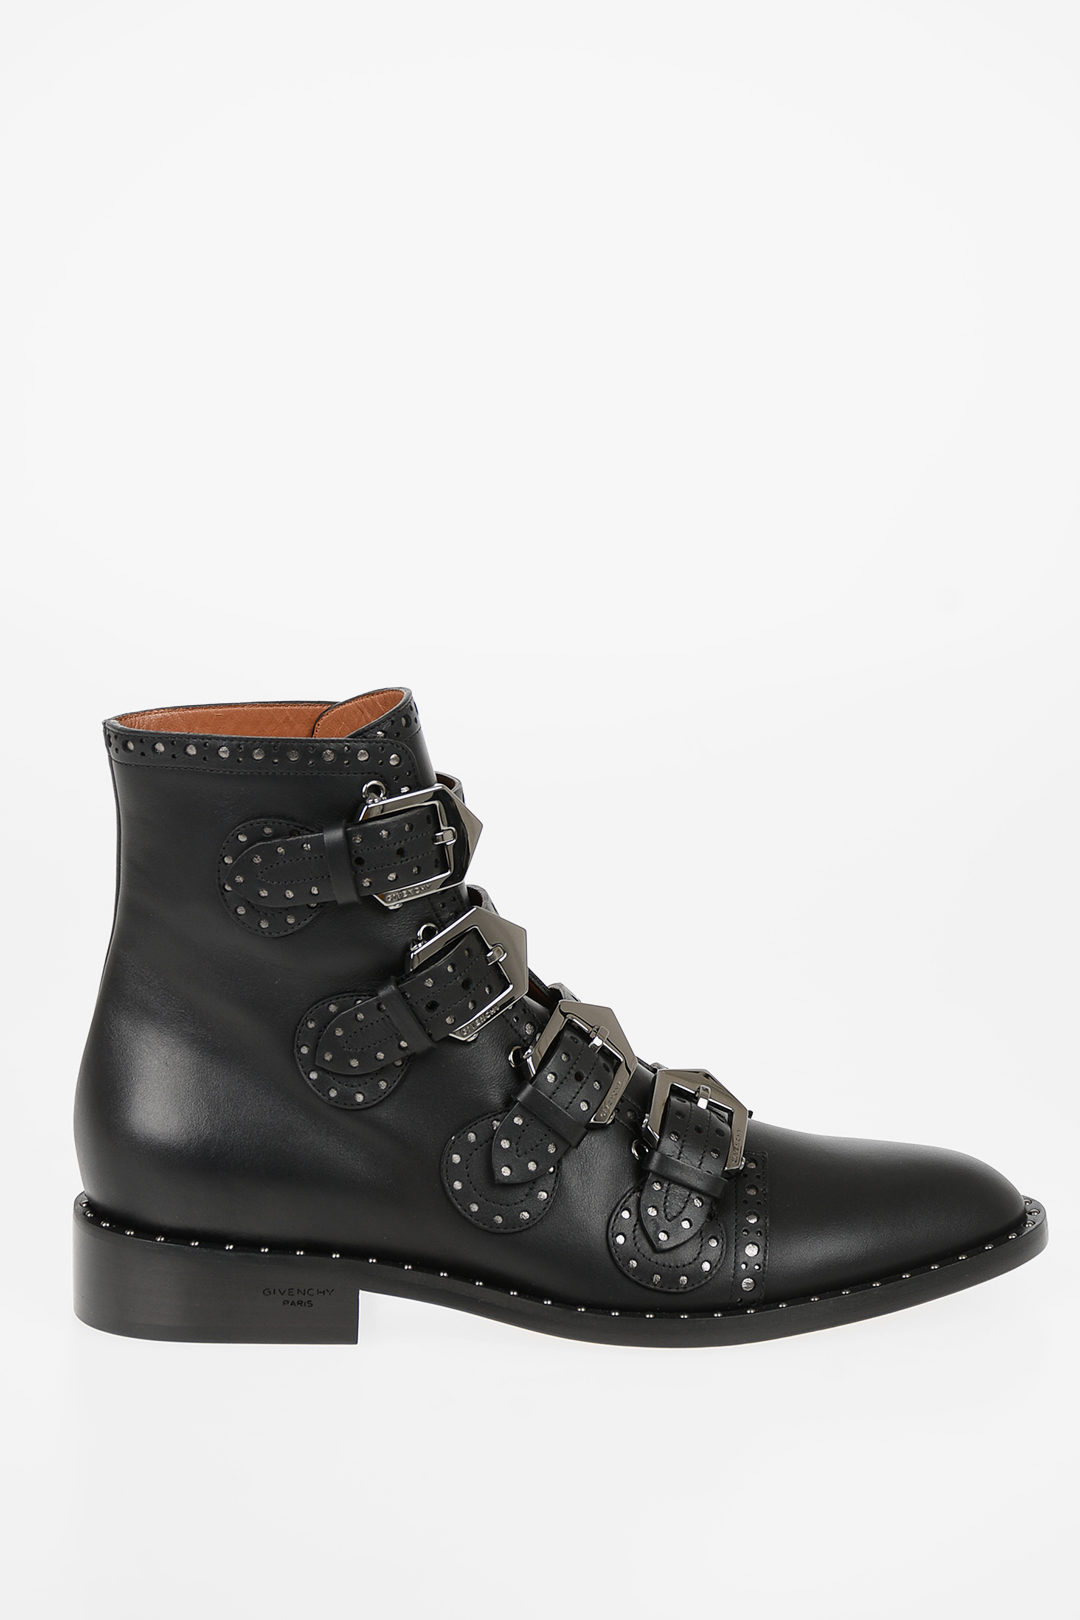 Givenchy Leather BOTTINE ELEGANT Ankle Boot women - Glamood Outlet